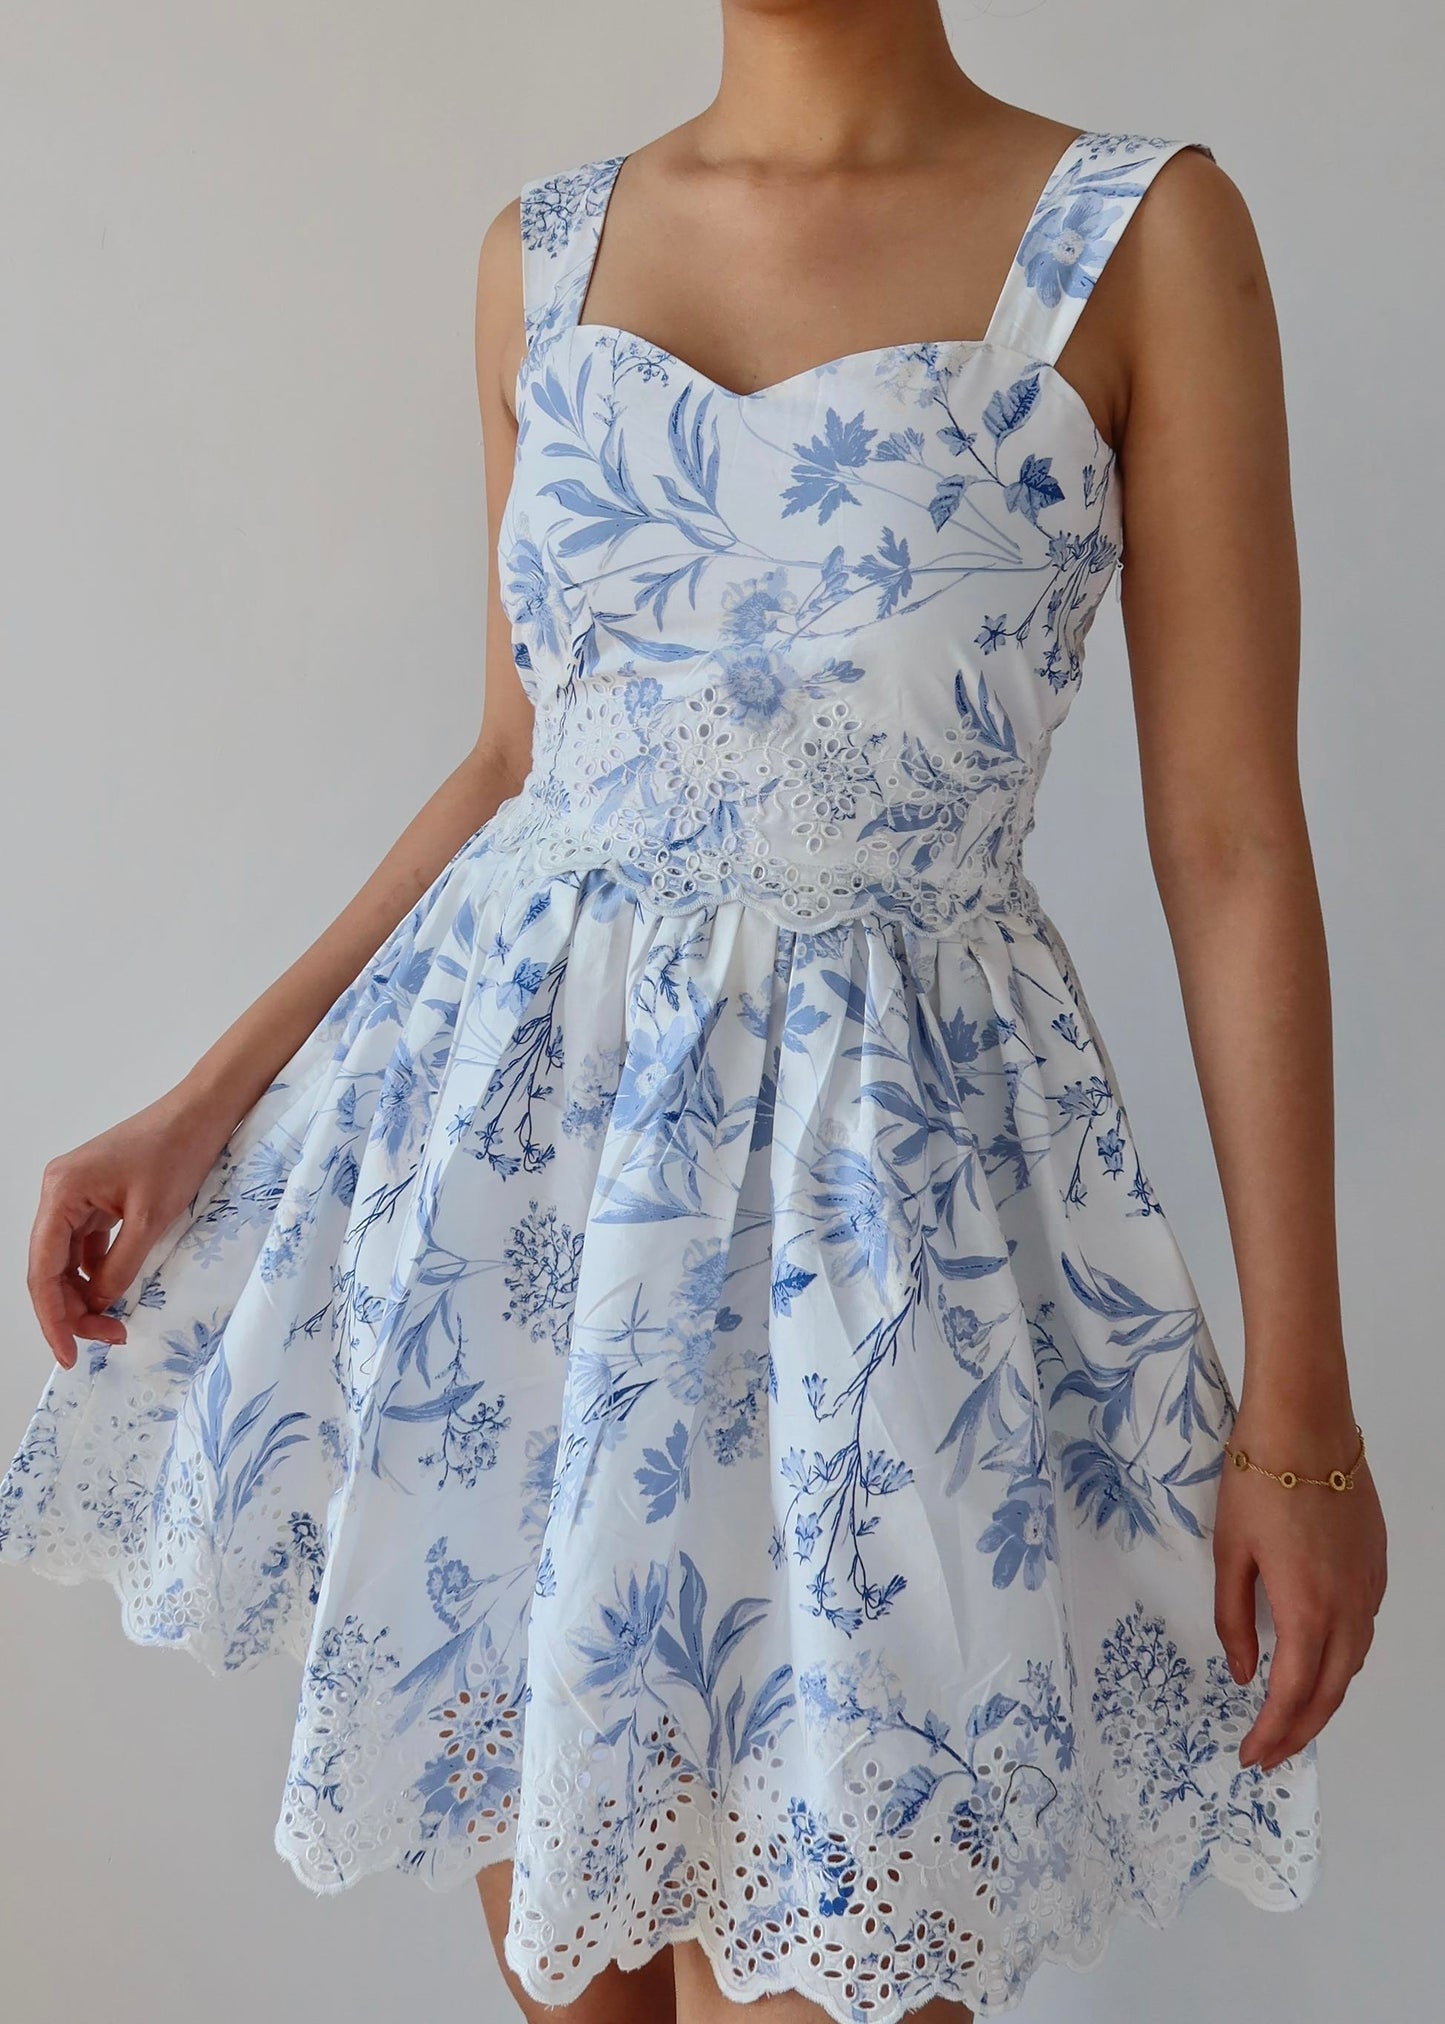 Blue Floral Sun Dress